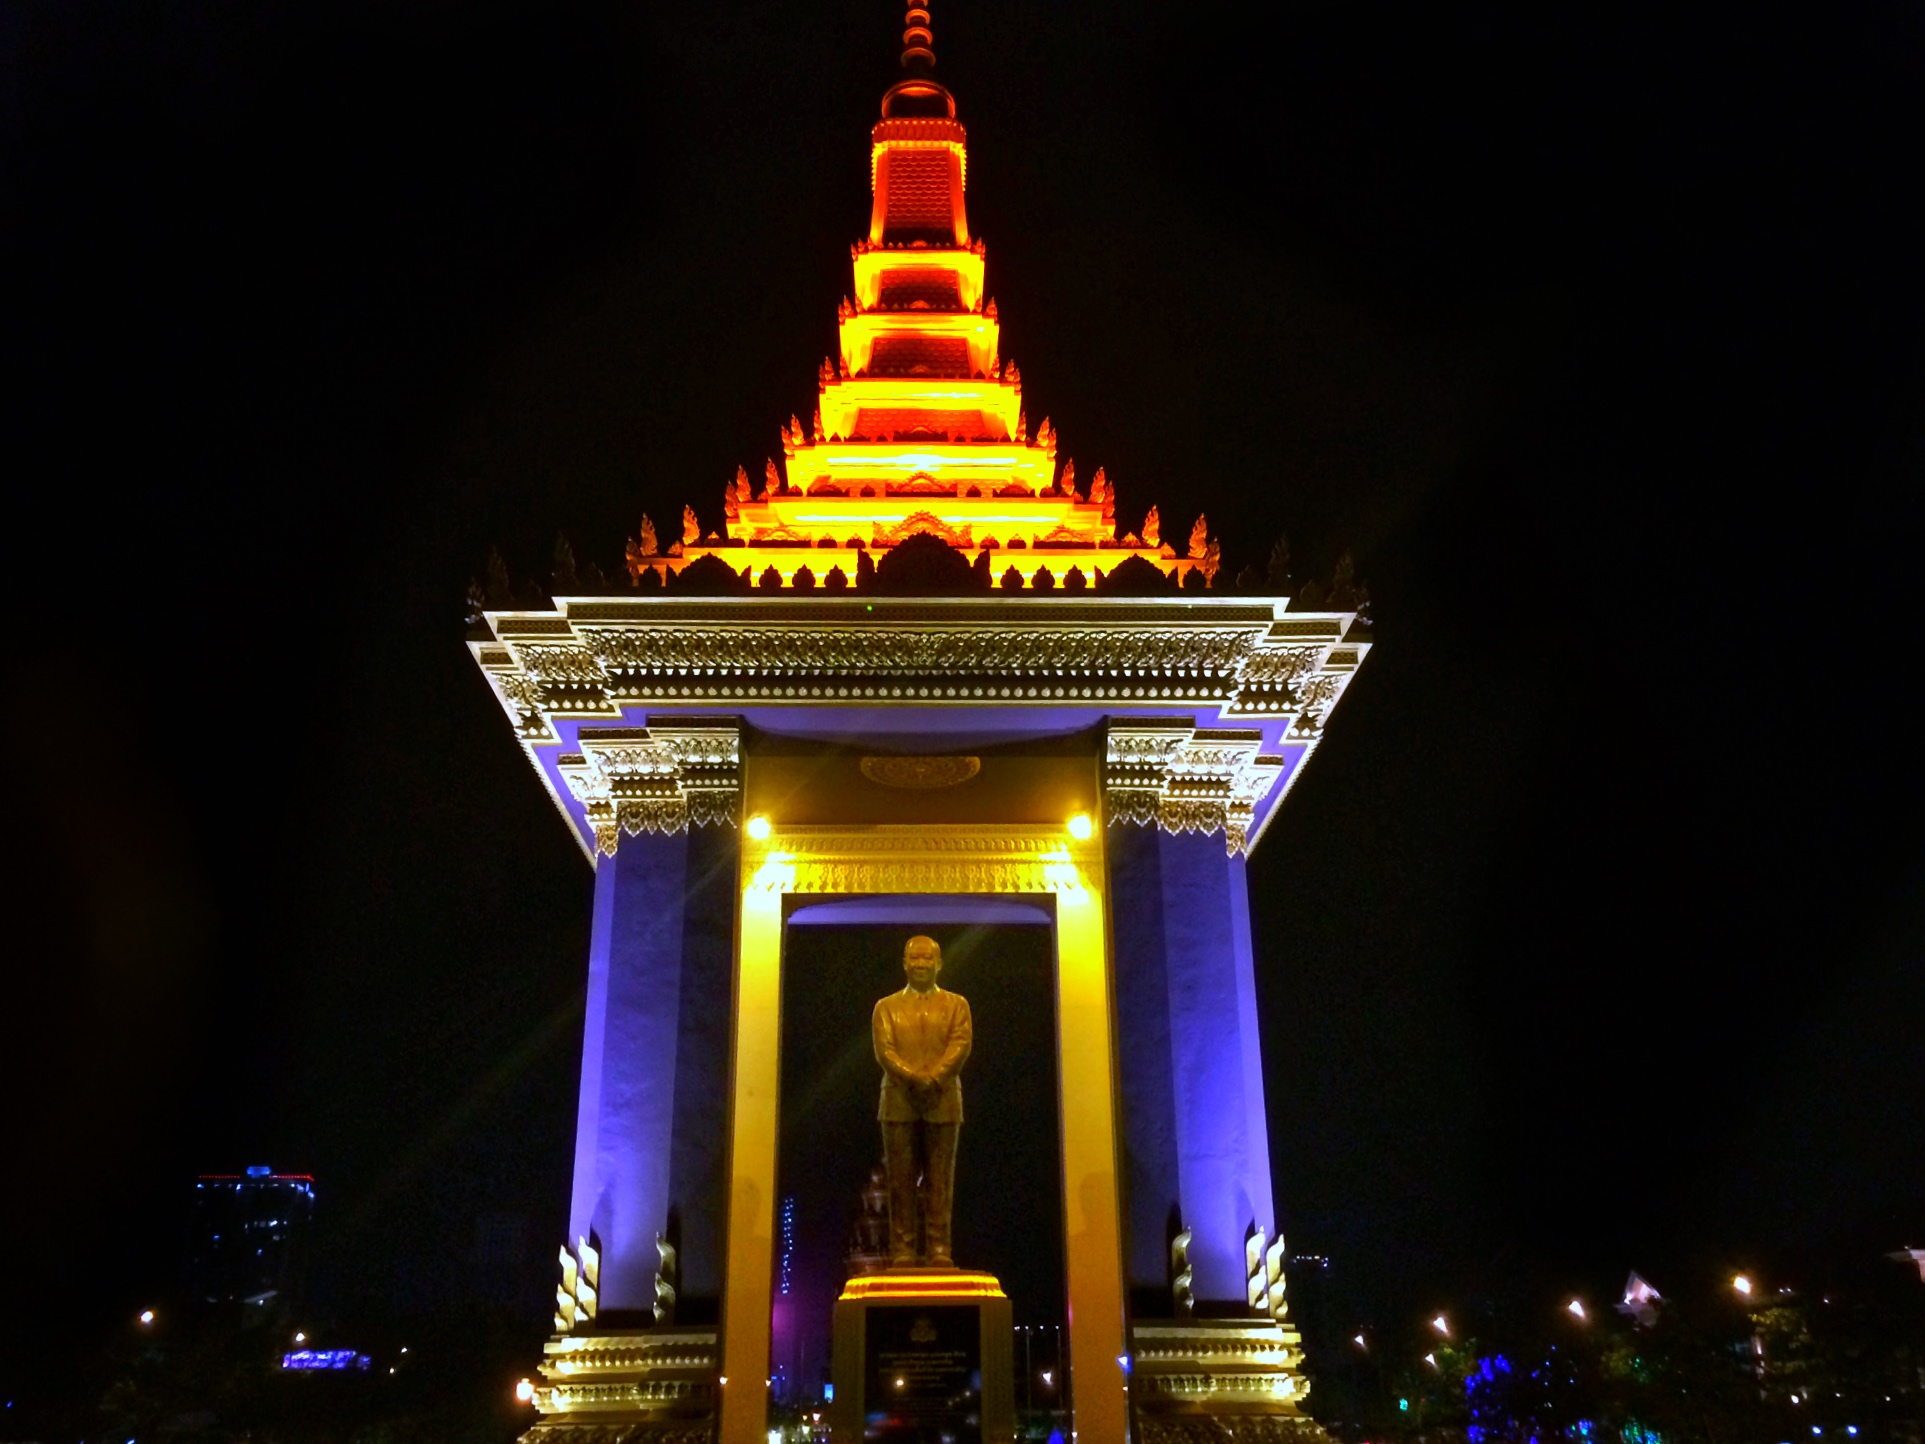 Beautifully lit Norodom Sihanouk memorial in Phnon Penh